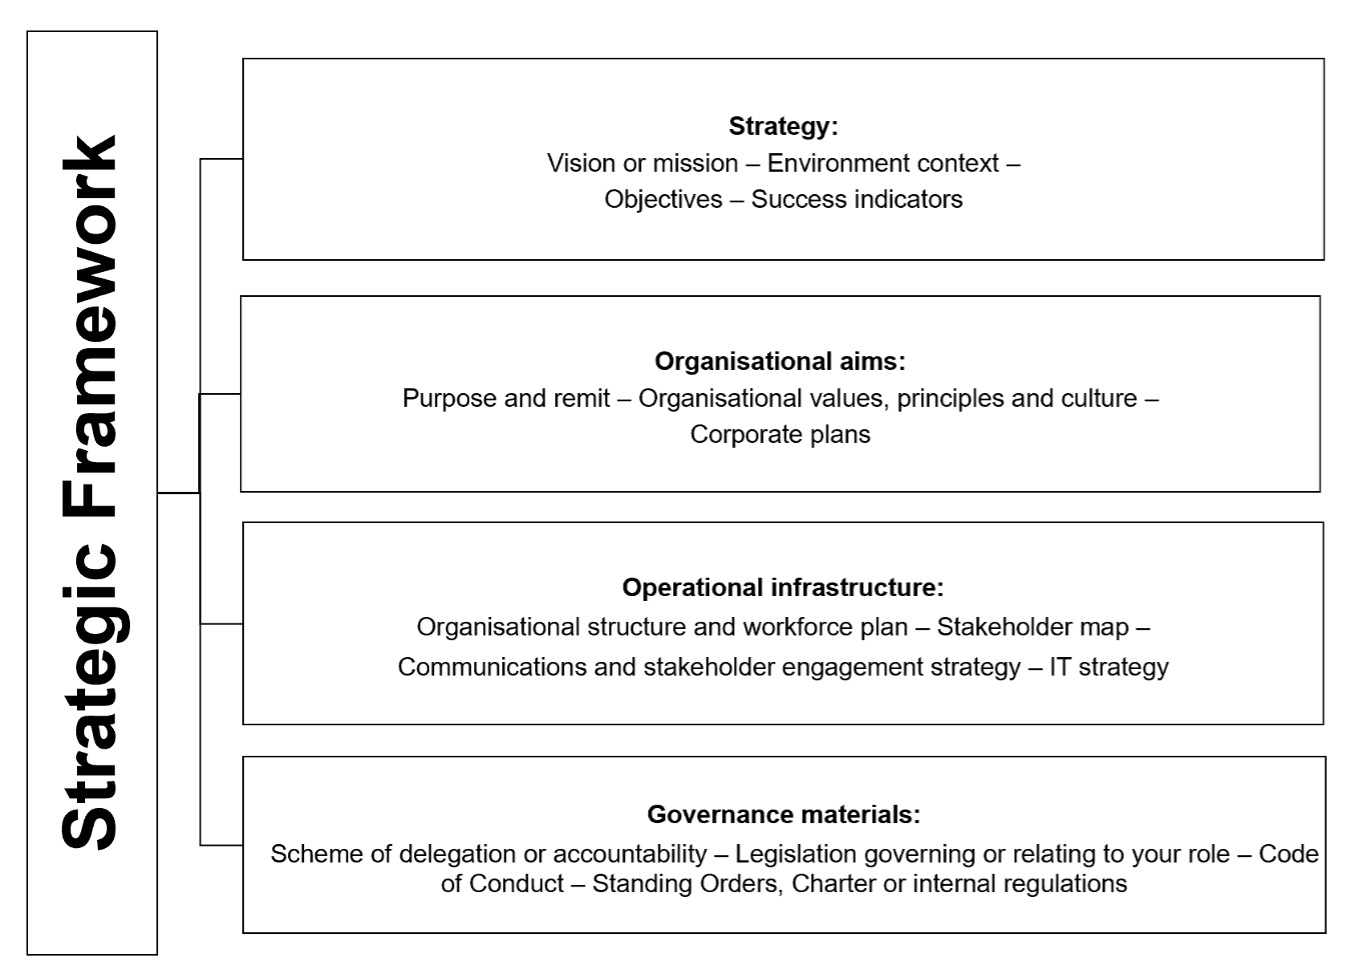 Strategic framework